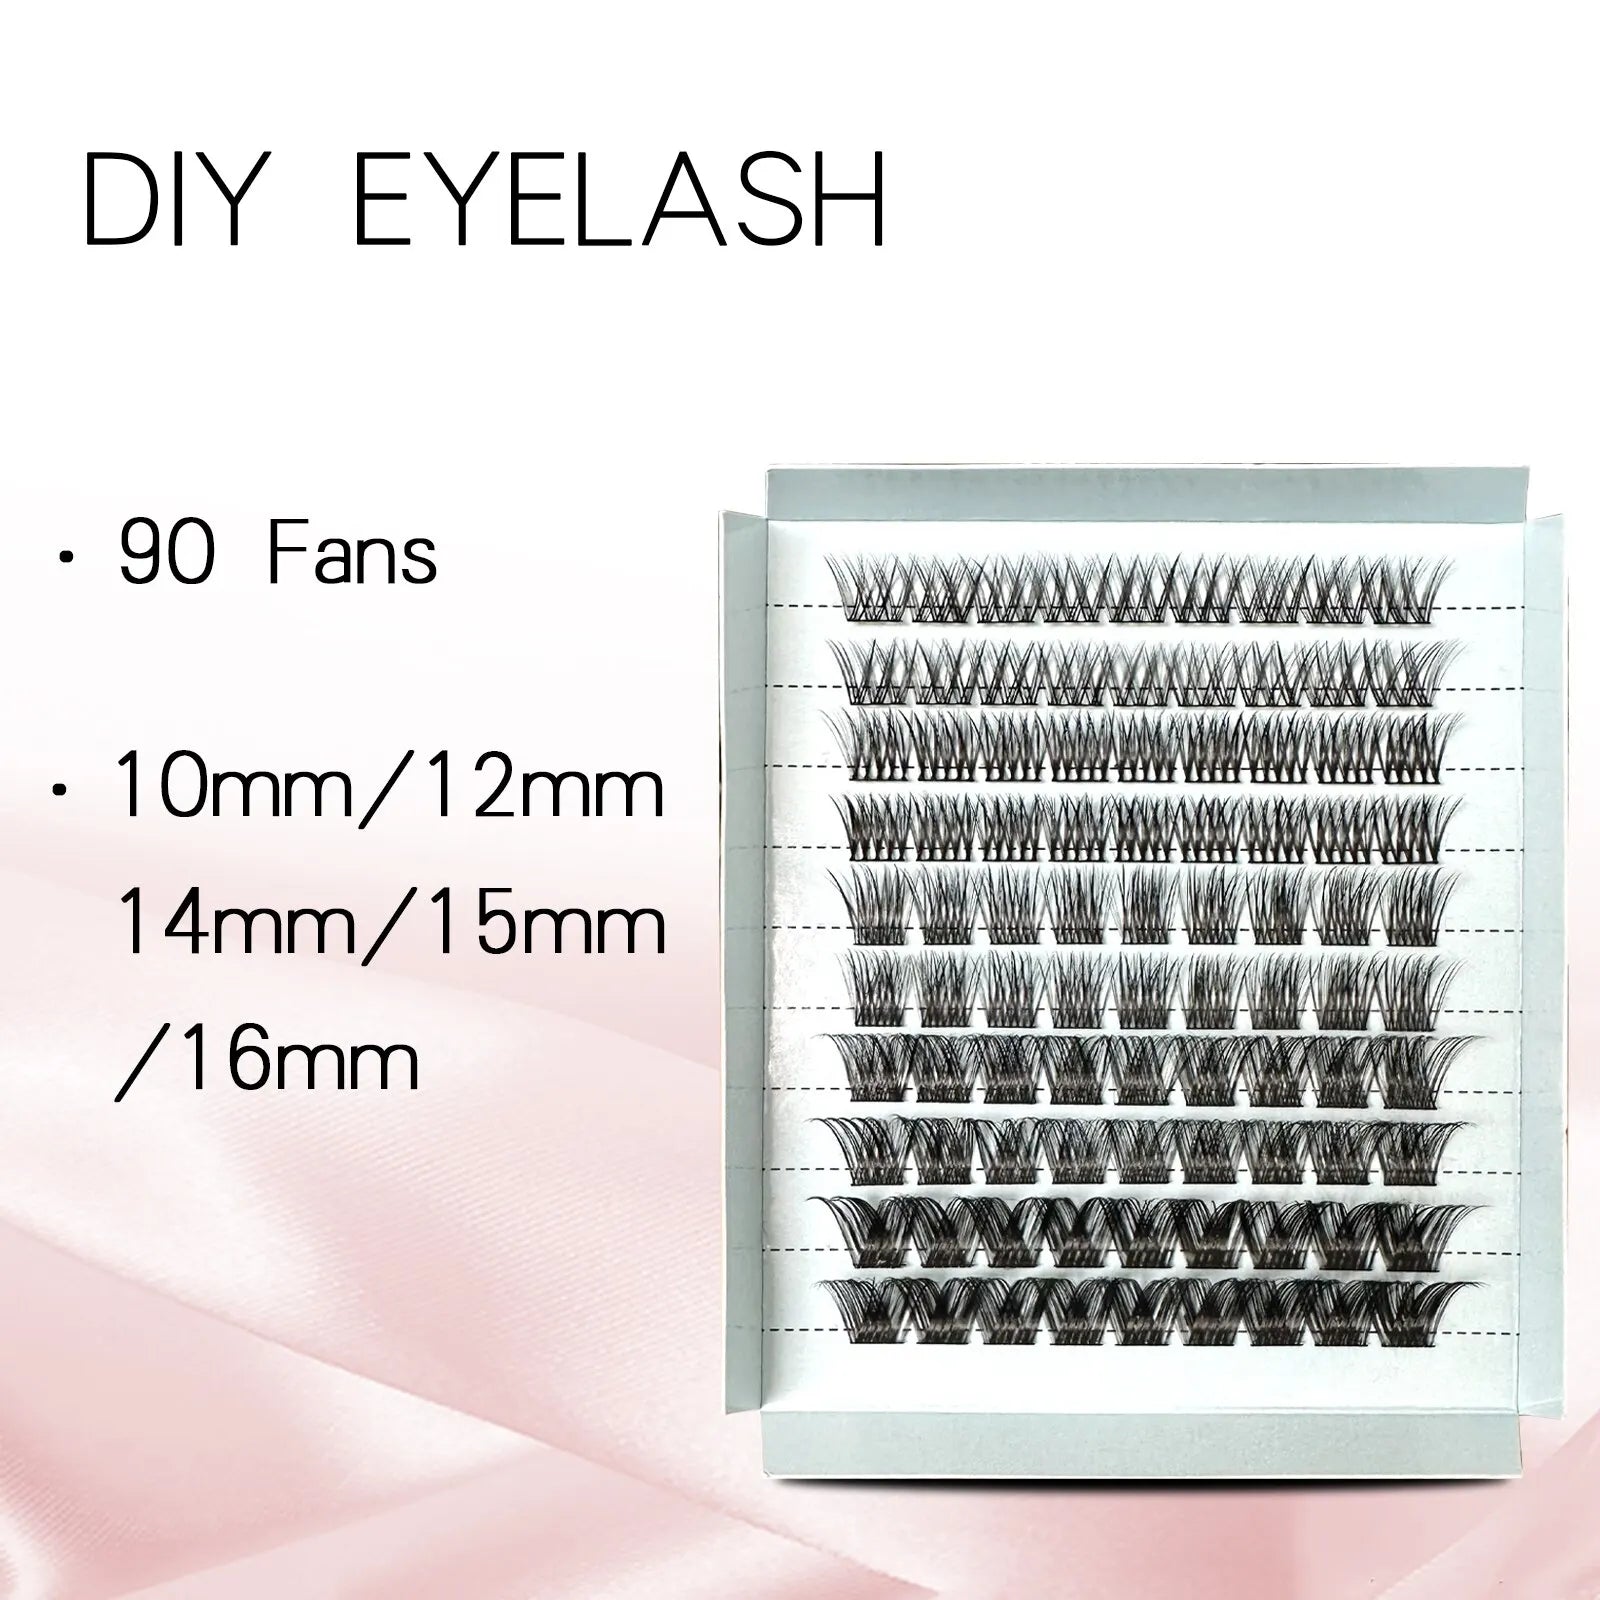 Mixed DIY Eyelash Segmented Eyelashes Faux Mink Lashes Very Softer Natural Reusable Large Box Affordable Package